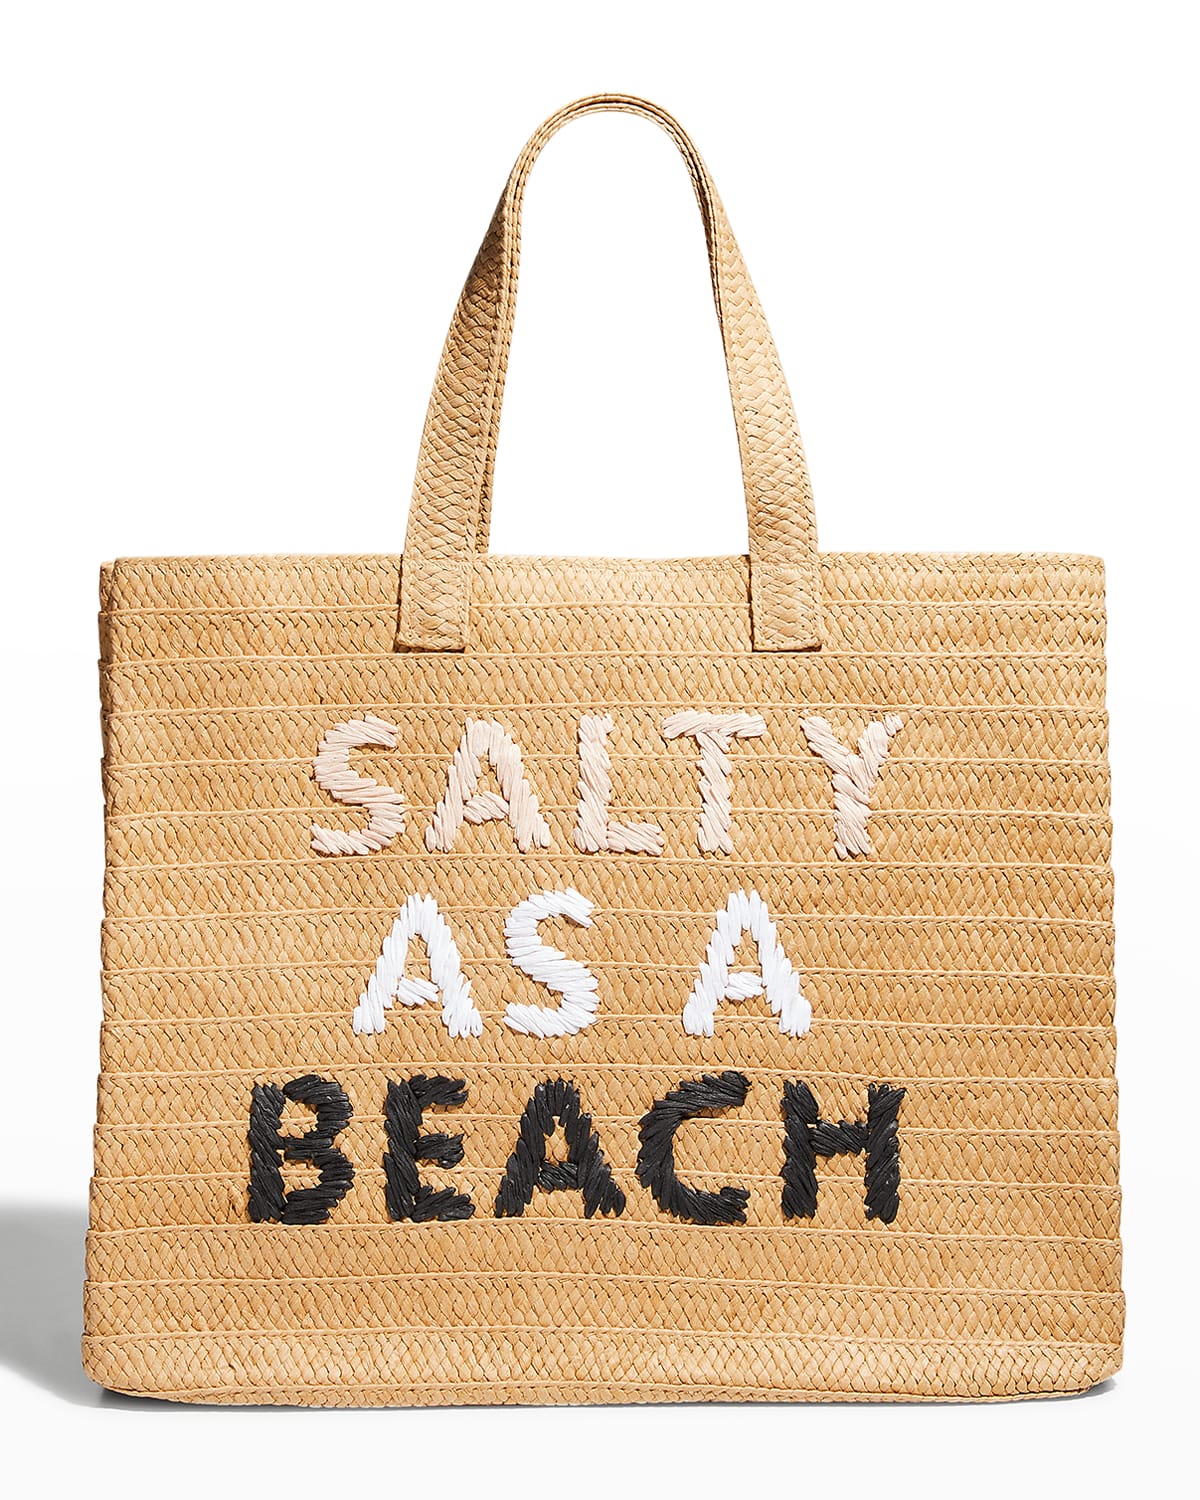 Btb Los Angeles Salty As A Beach Straw Tote Bag In Black/dusty/white